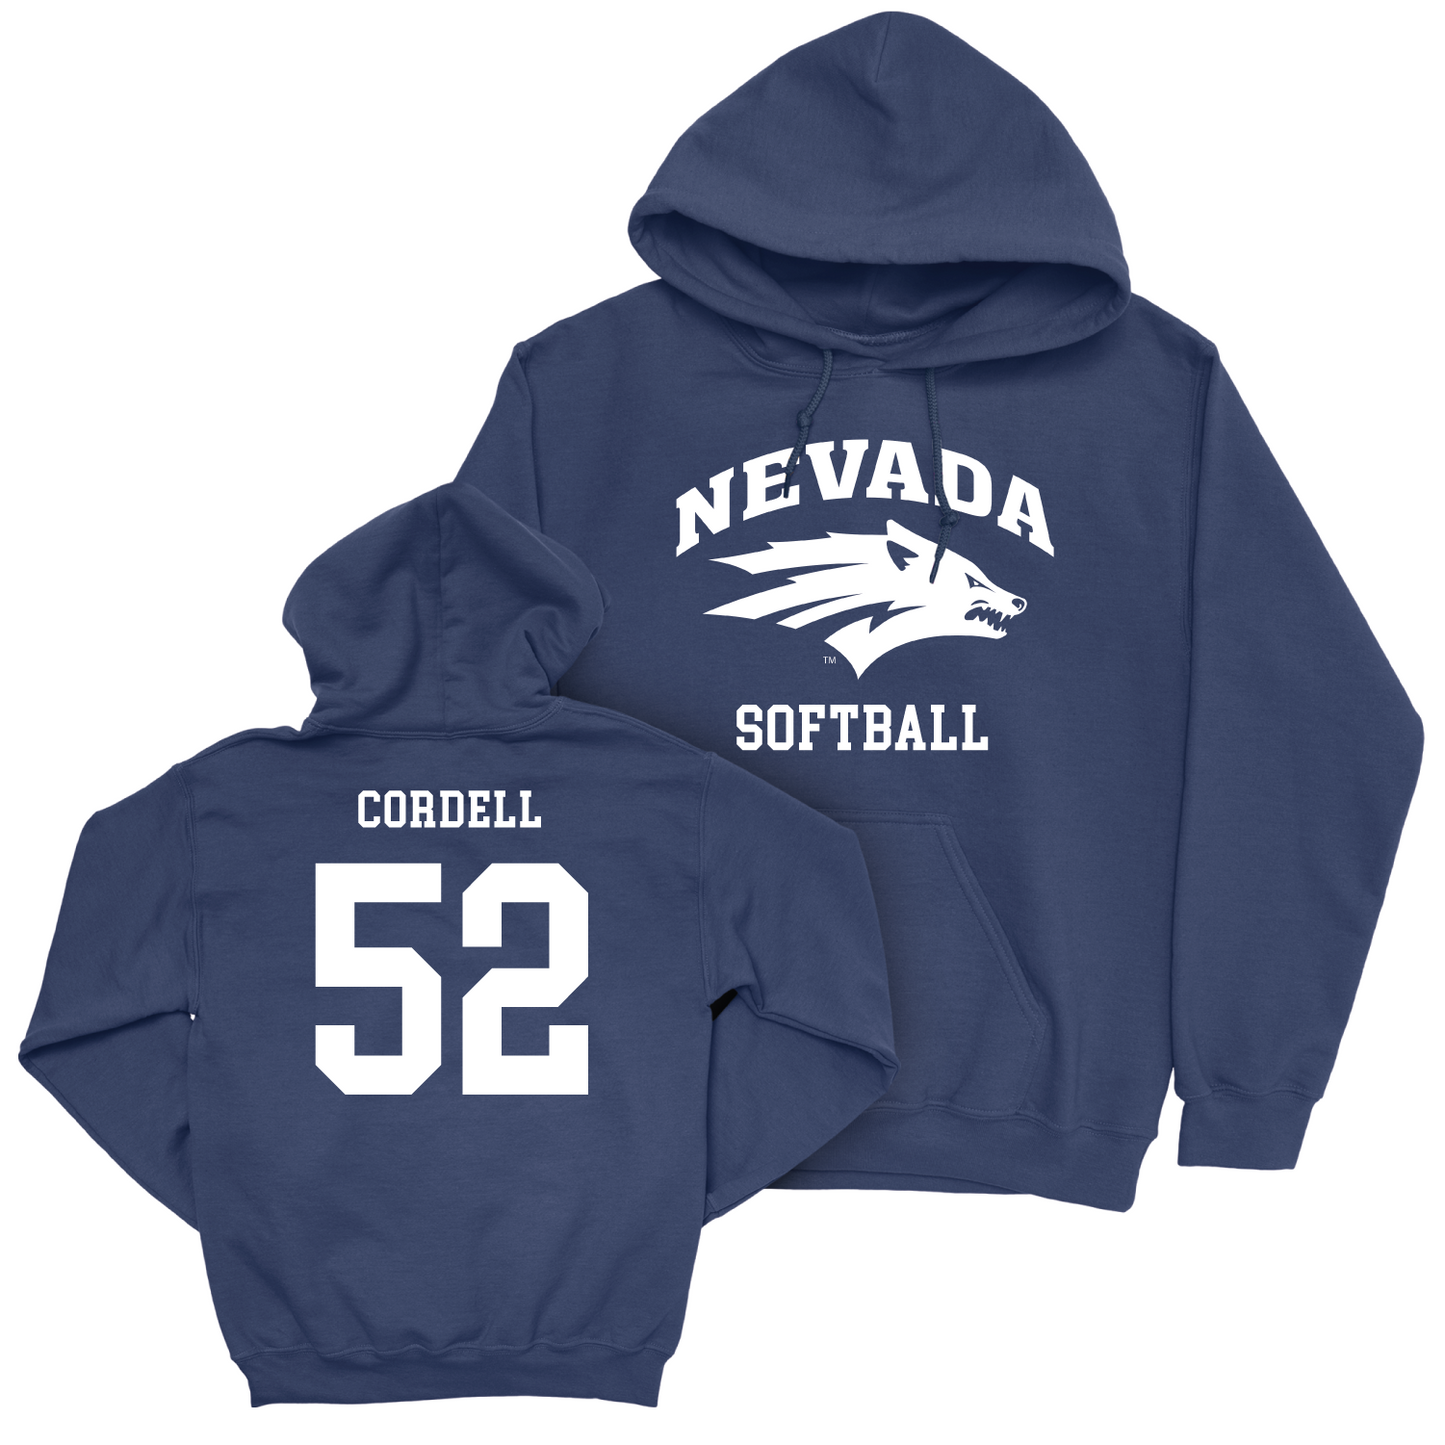 Nevada Softball Navy Staple Hoodie - Avery Cordell Youth Small